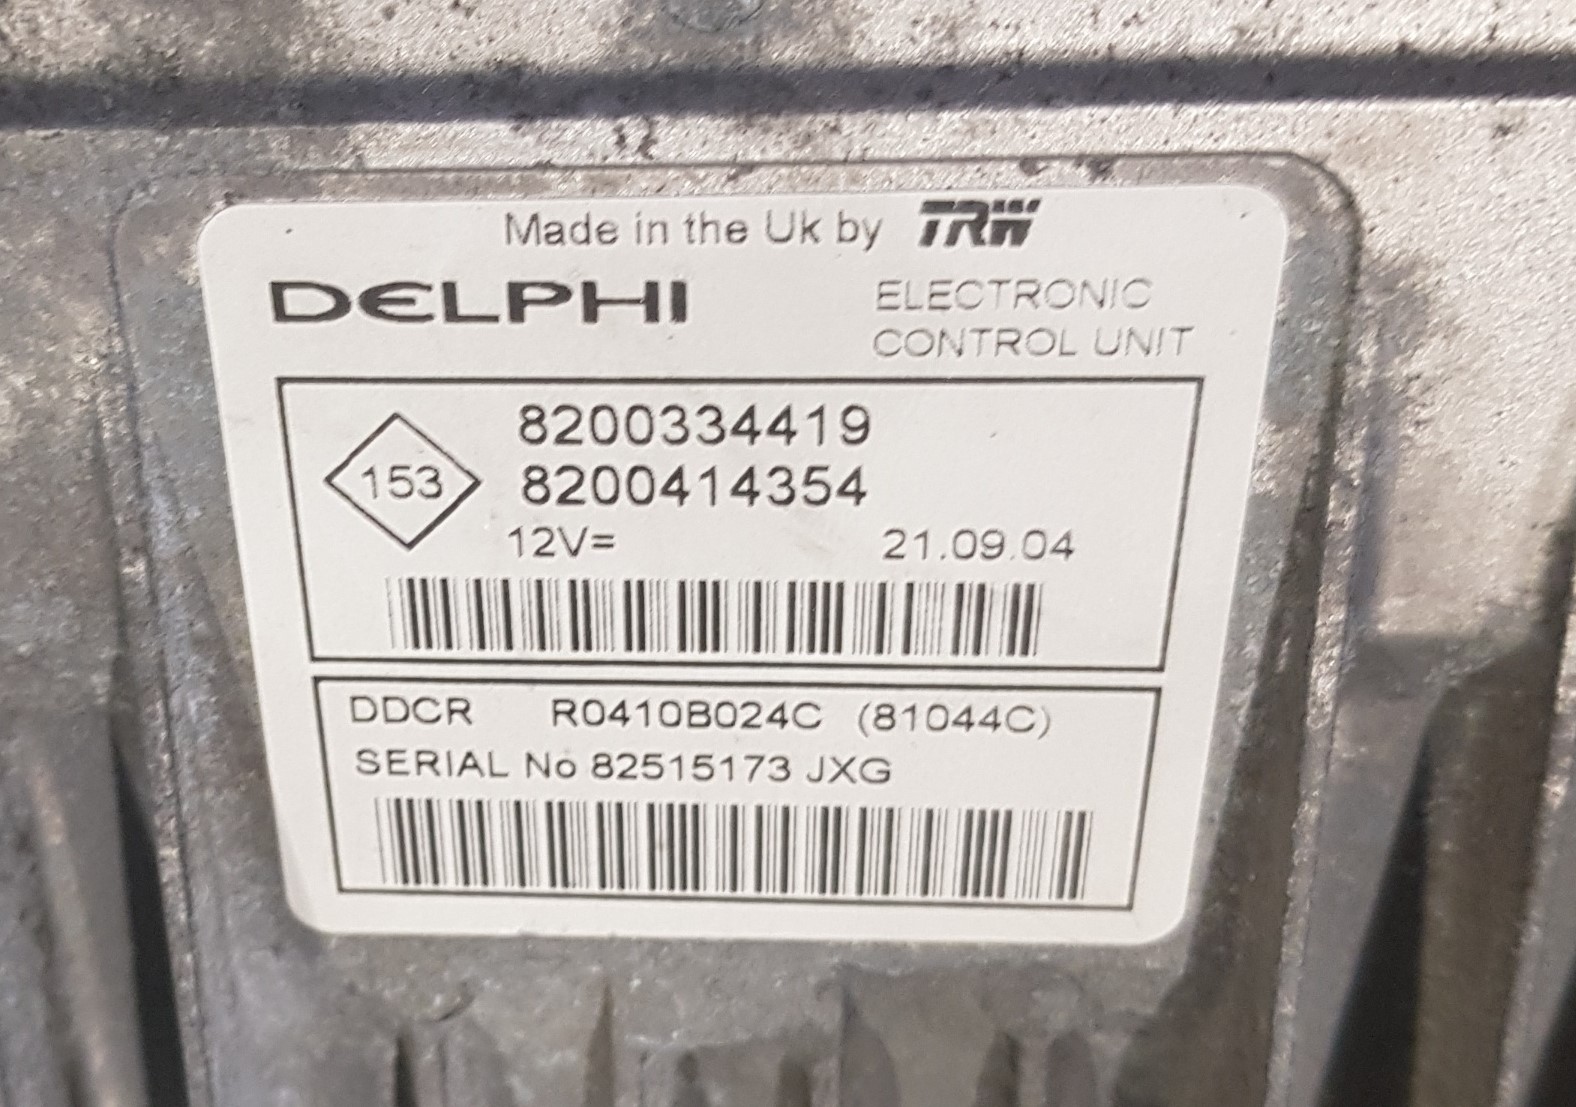 Centralina motore Delphi - Renault used DDCR ecu